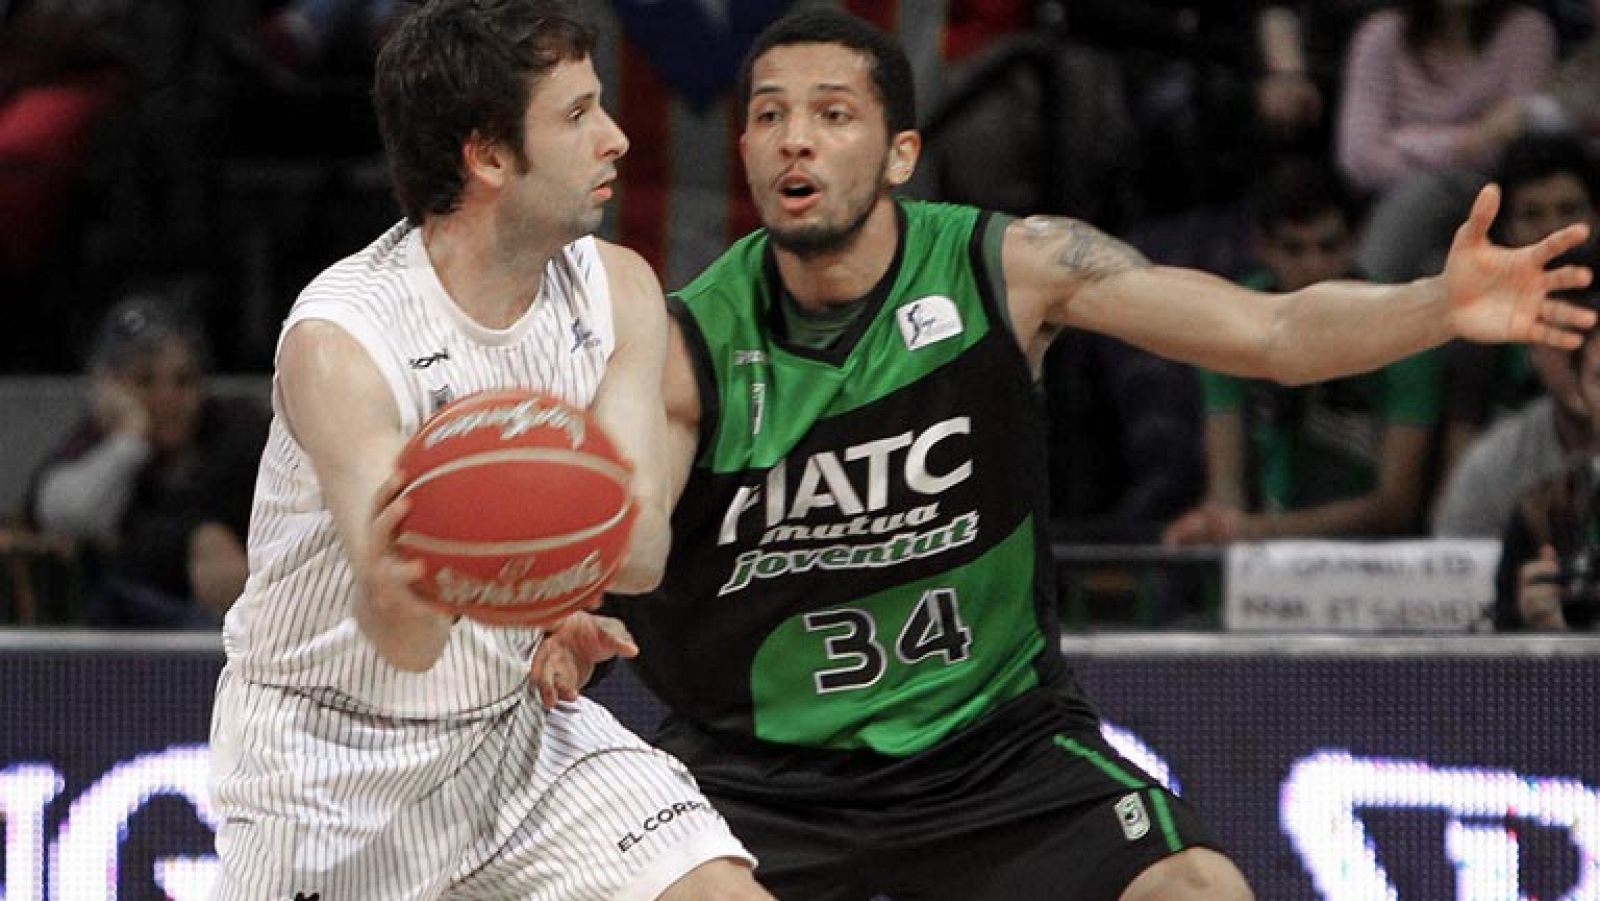 Baloncesto en RTVE: FIATC Joventut 80 - Bilbao Basket 70 | RTVE Play